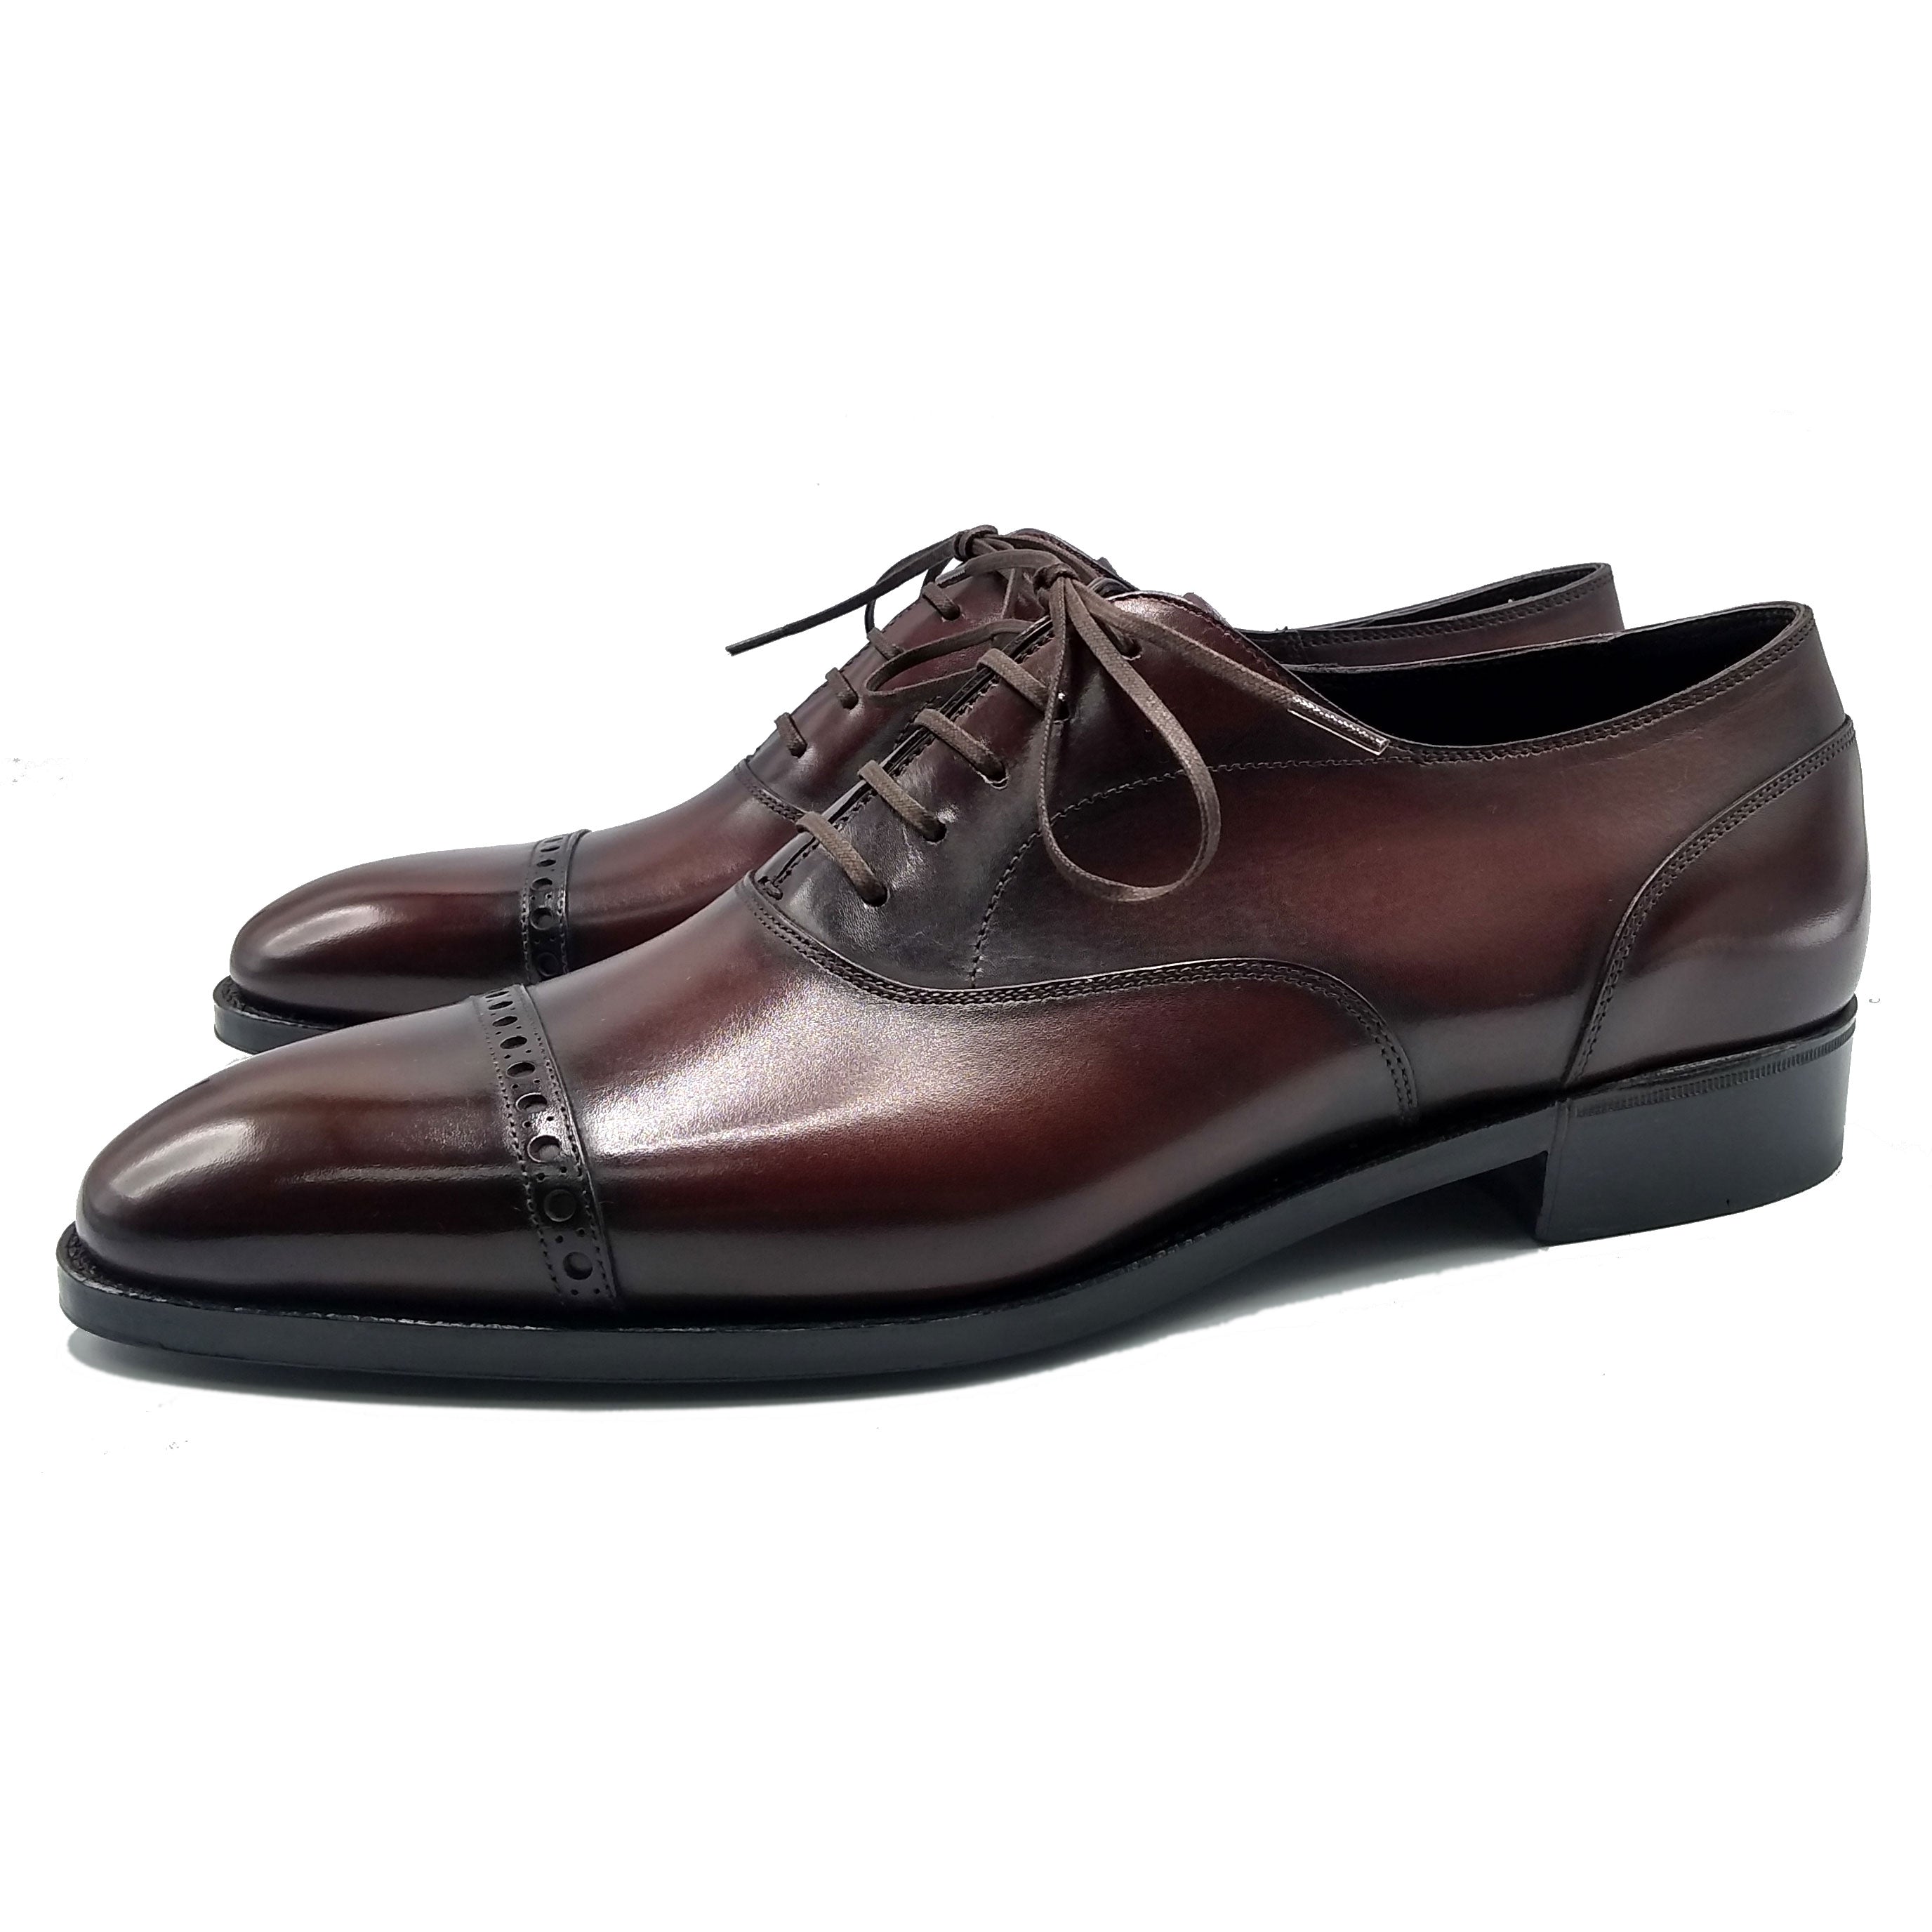 Norman Vilalta, Bespoke Shoemaker - Men's Shoes Barcelona, Spain - Captoe Oxford